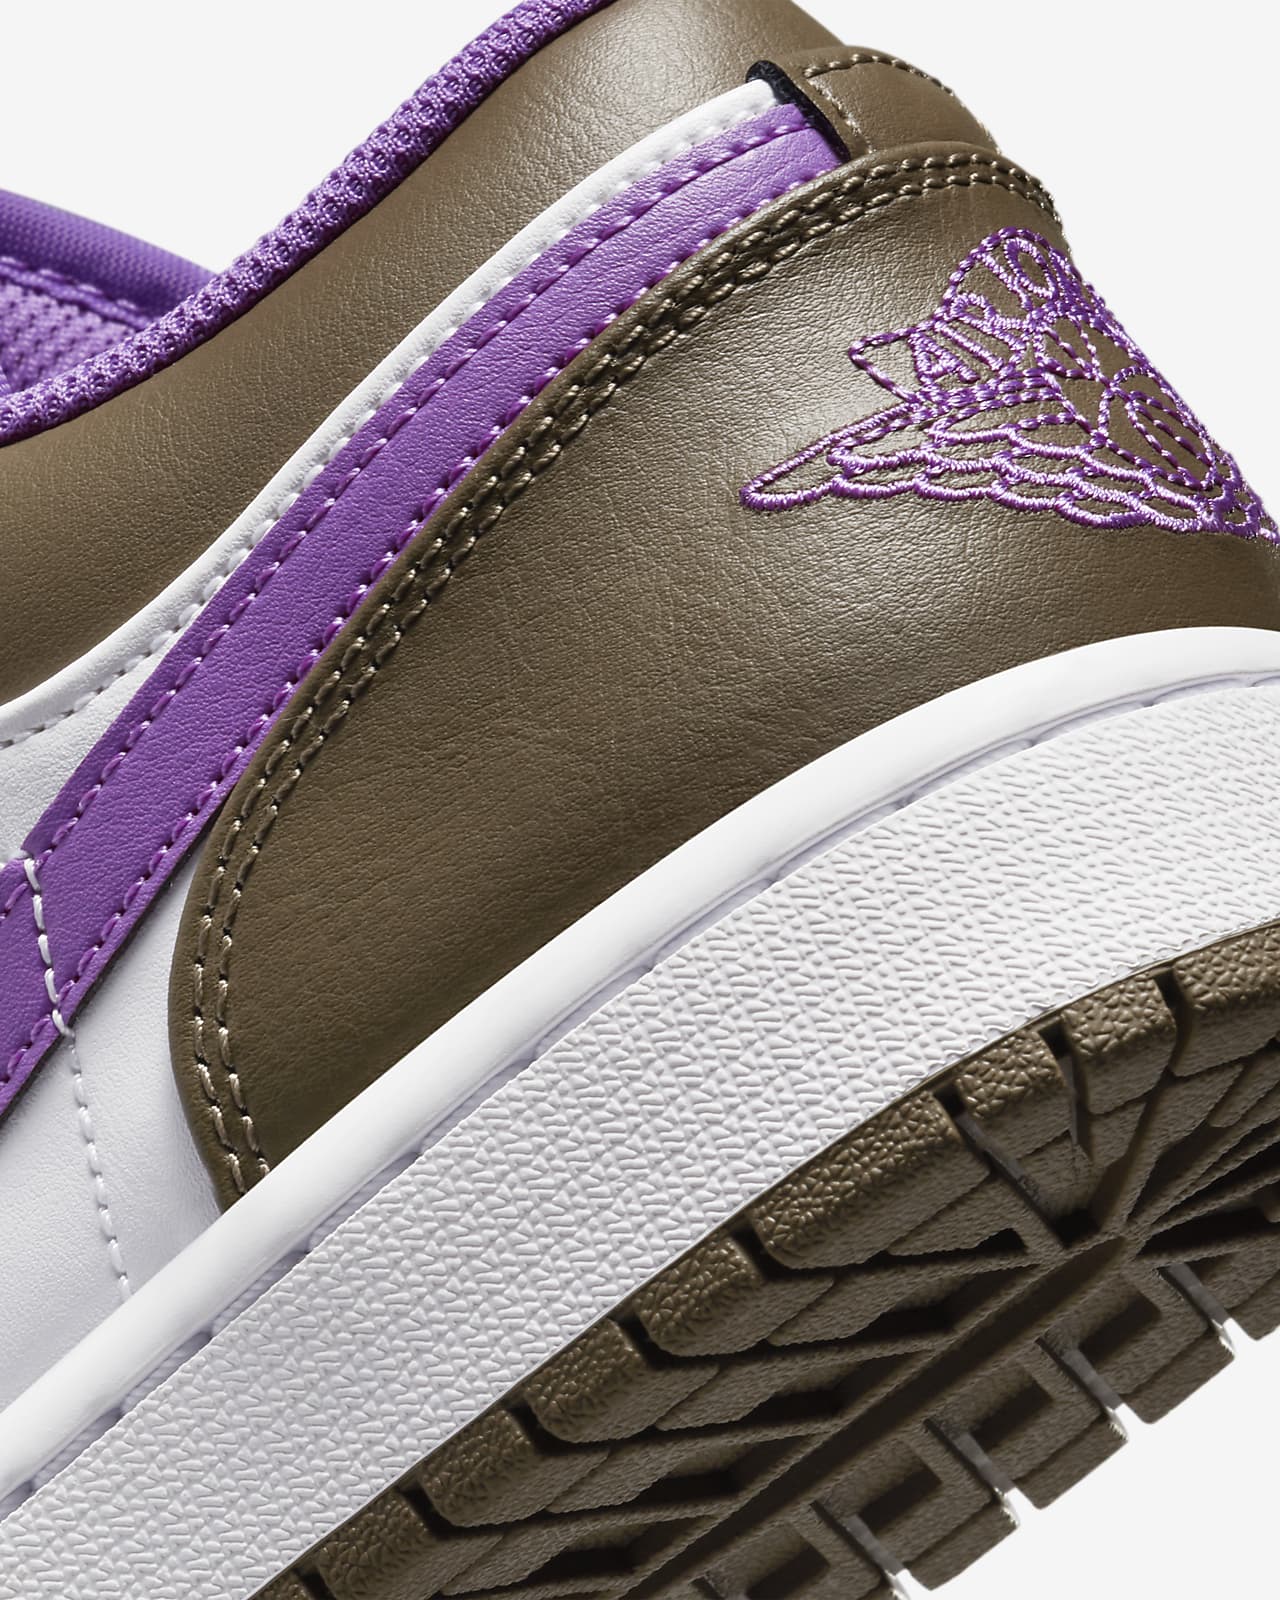 Nike - Air Jordan 1 Low - Purple Mocha